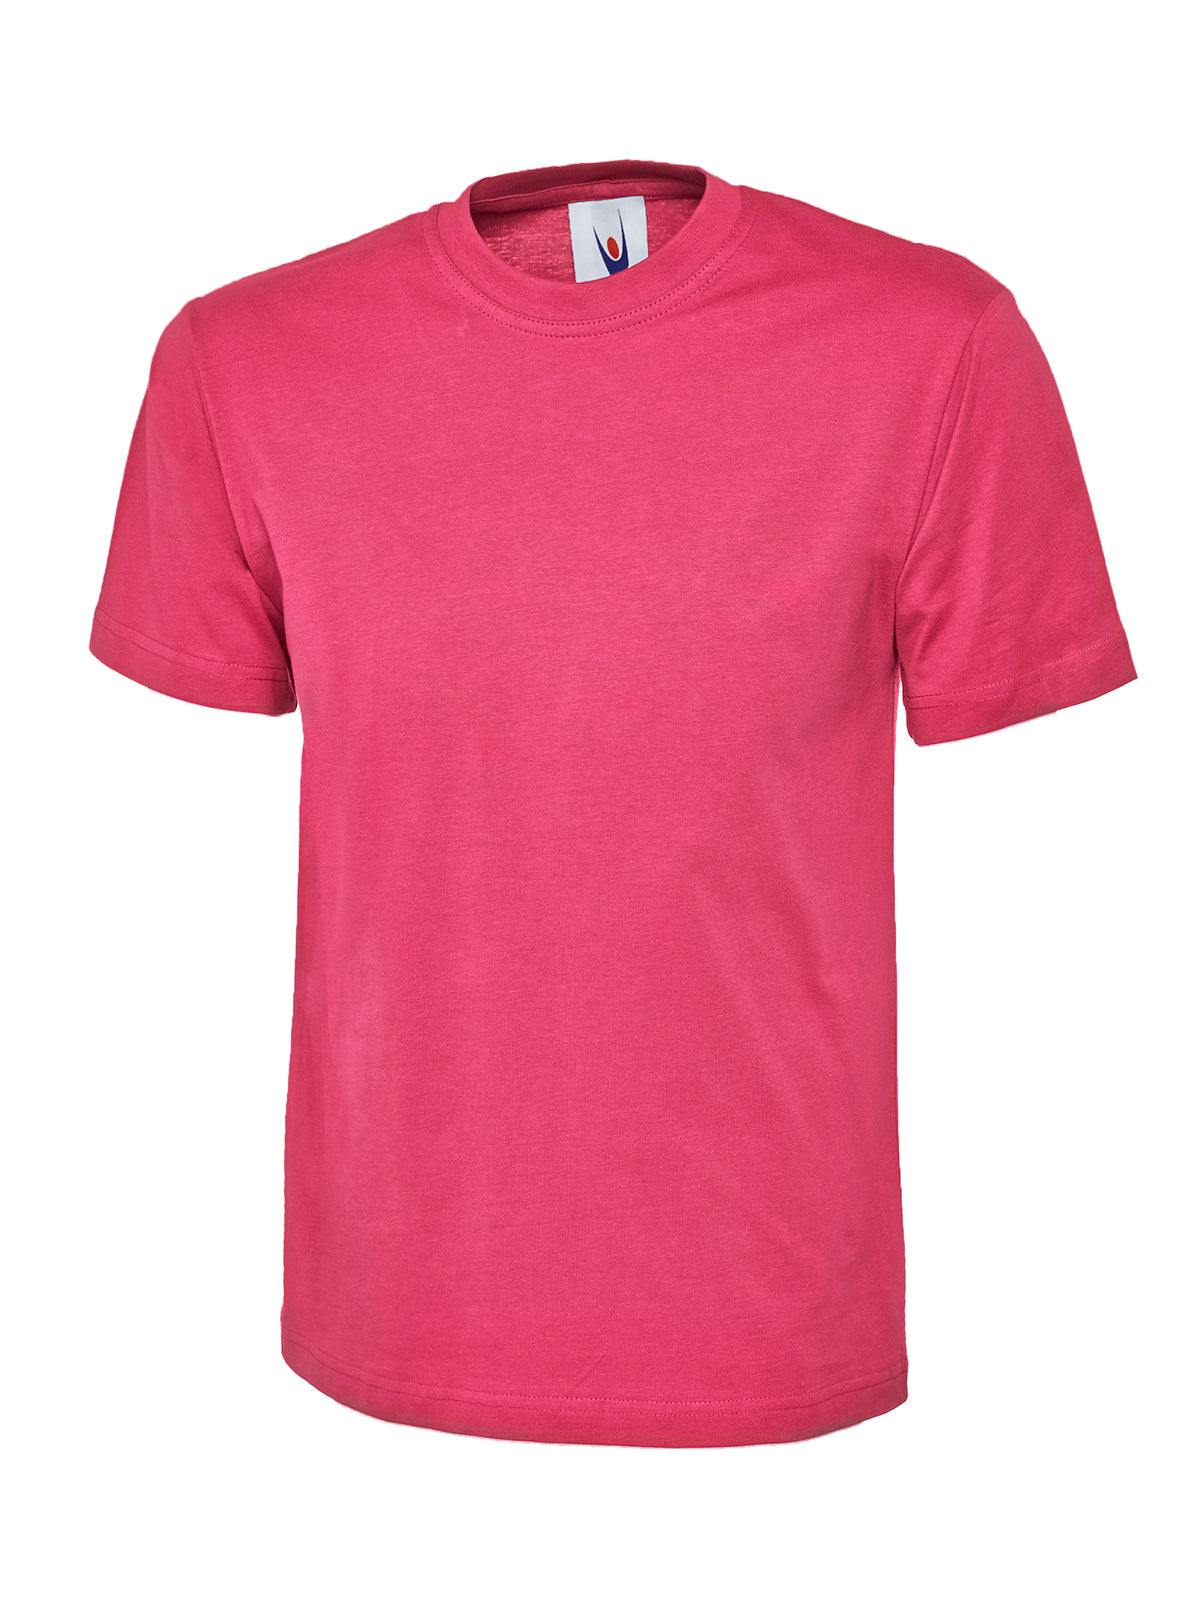 Uneek Classic T-shirt UC301 - Hot Pink